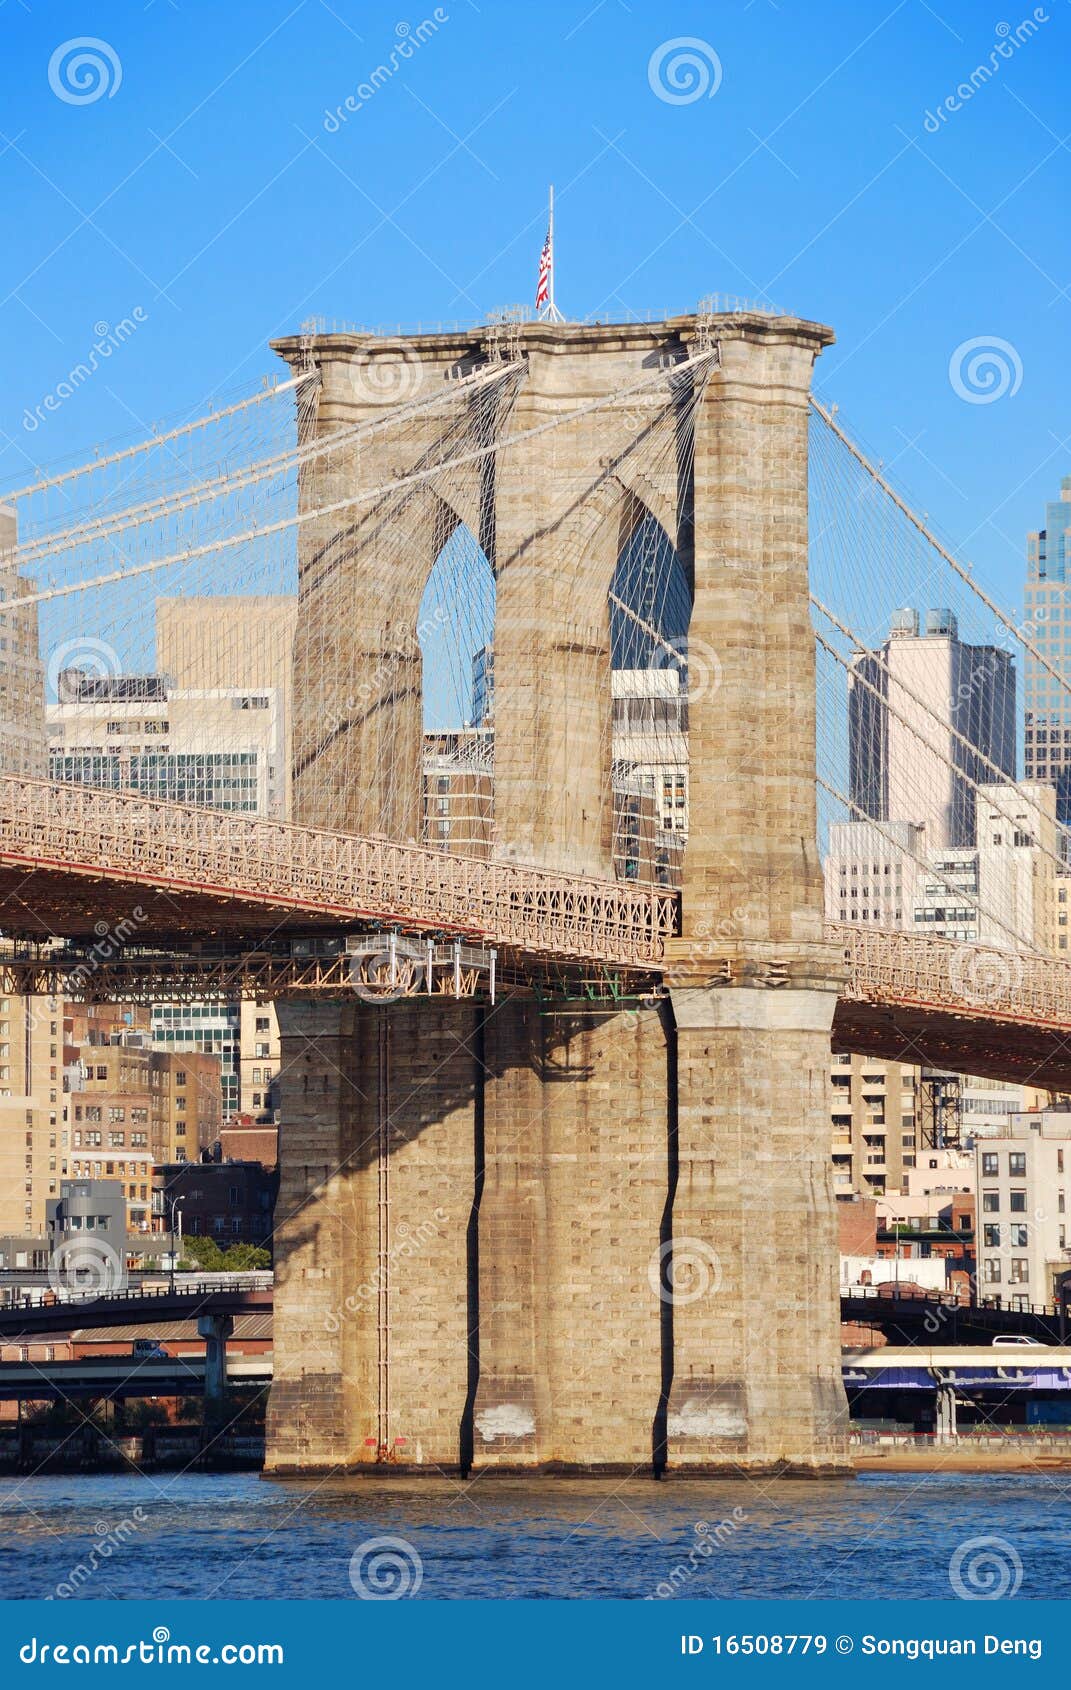 New York City Brooklyn Bridge Closeup Stock Image - Image of scenic ...